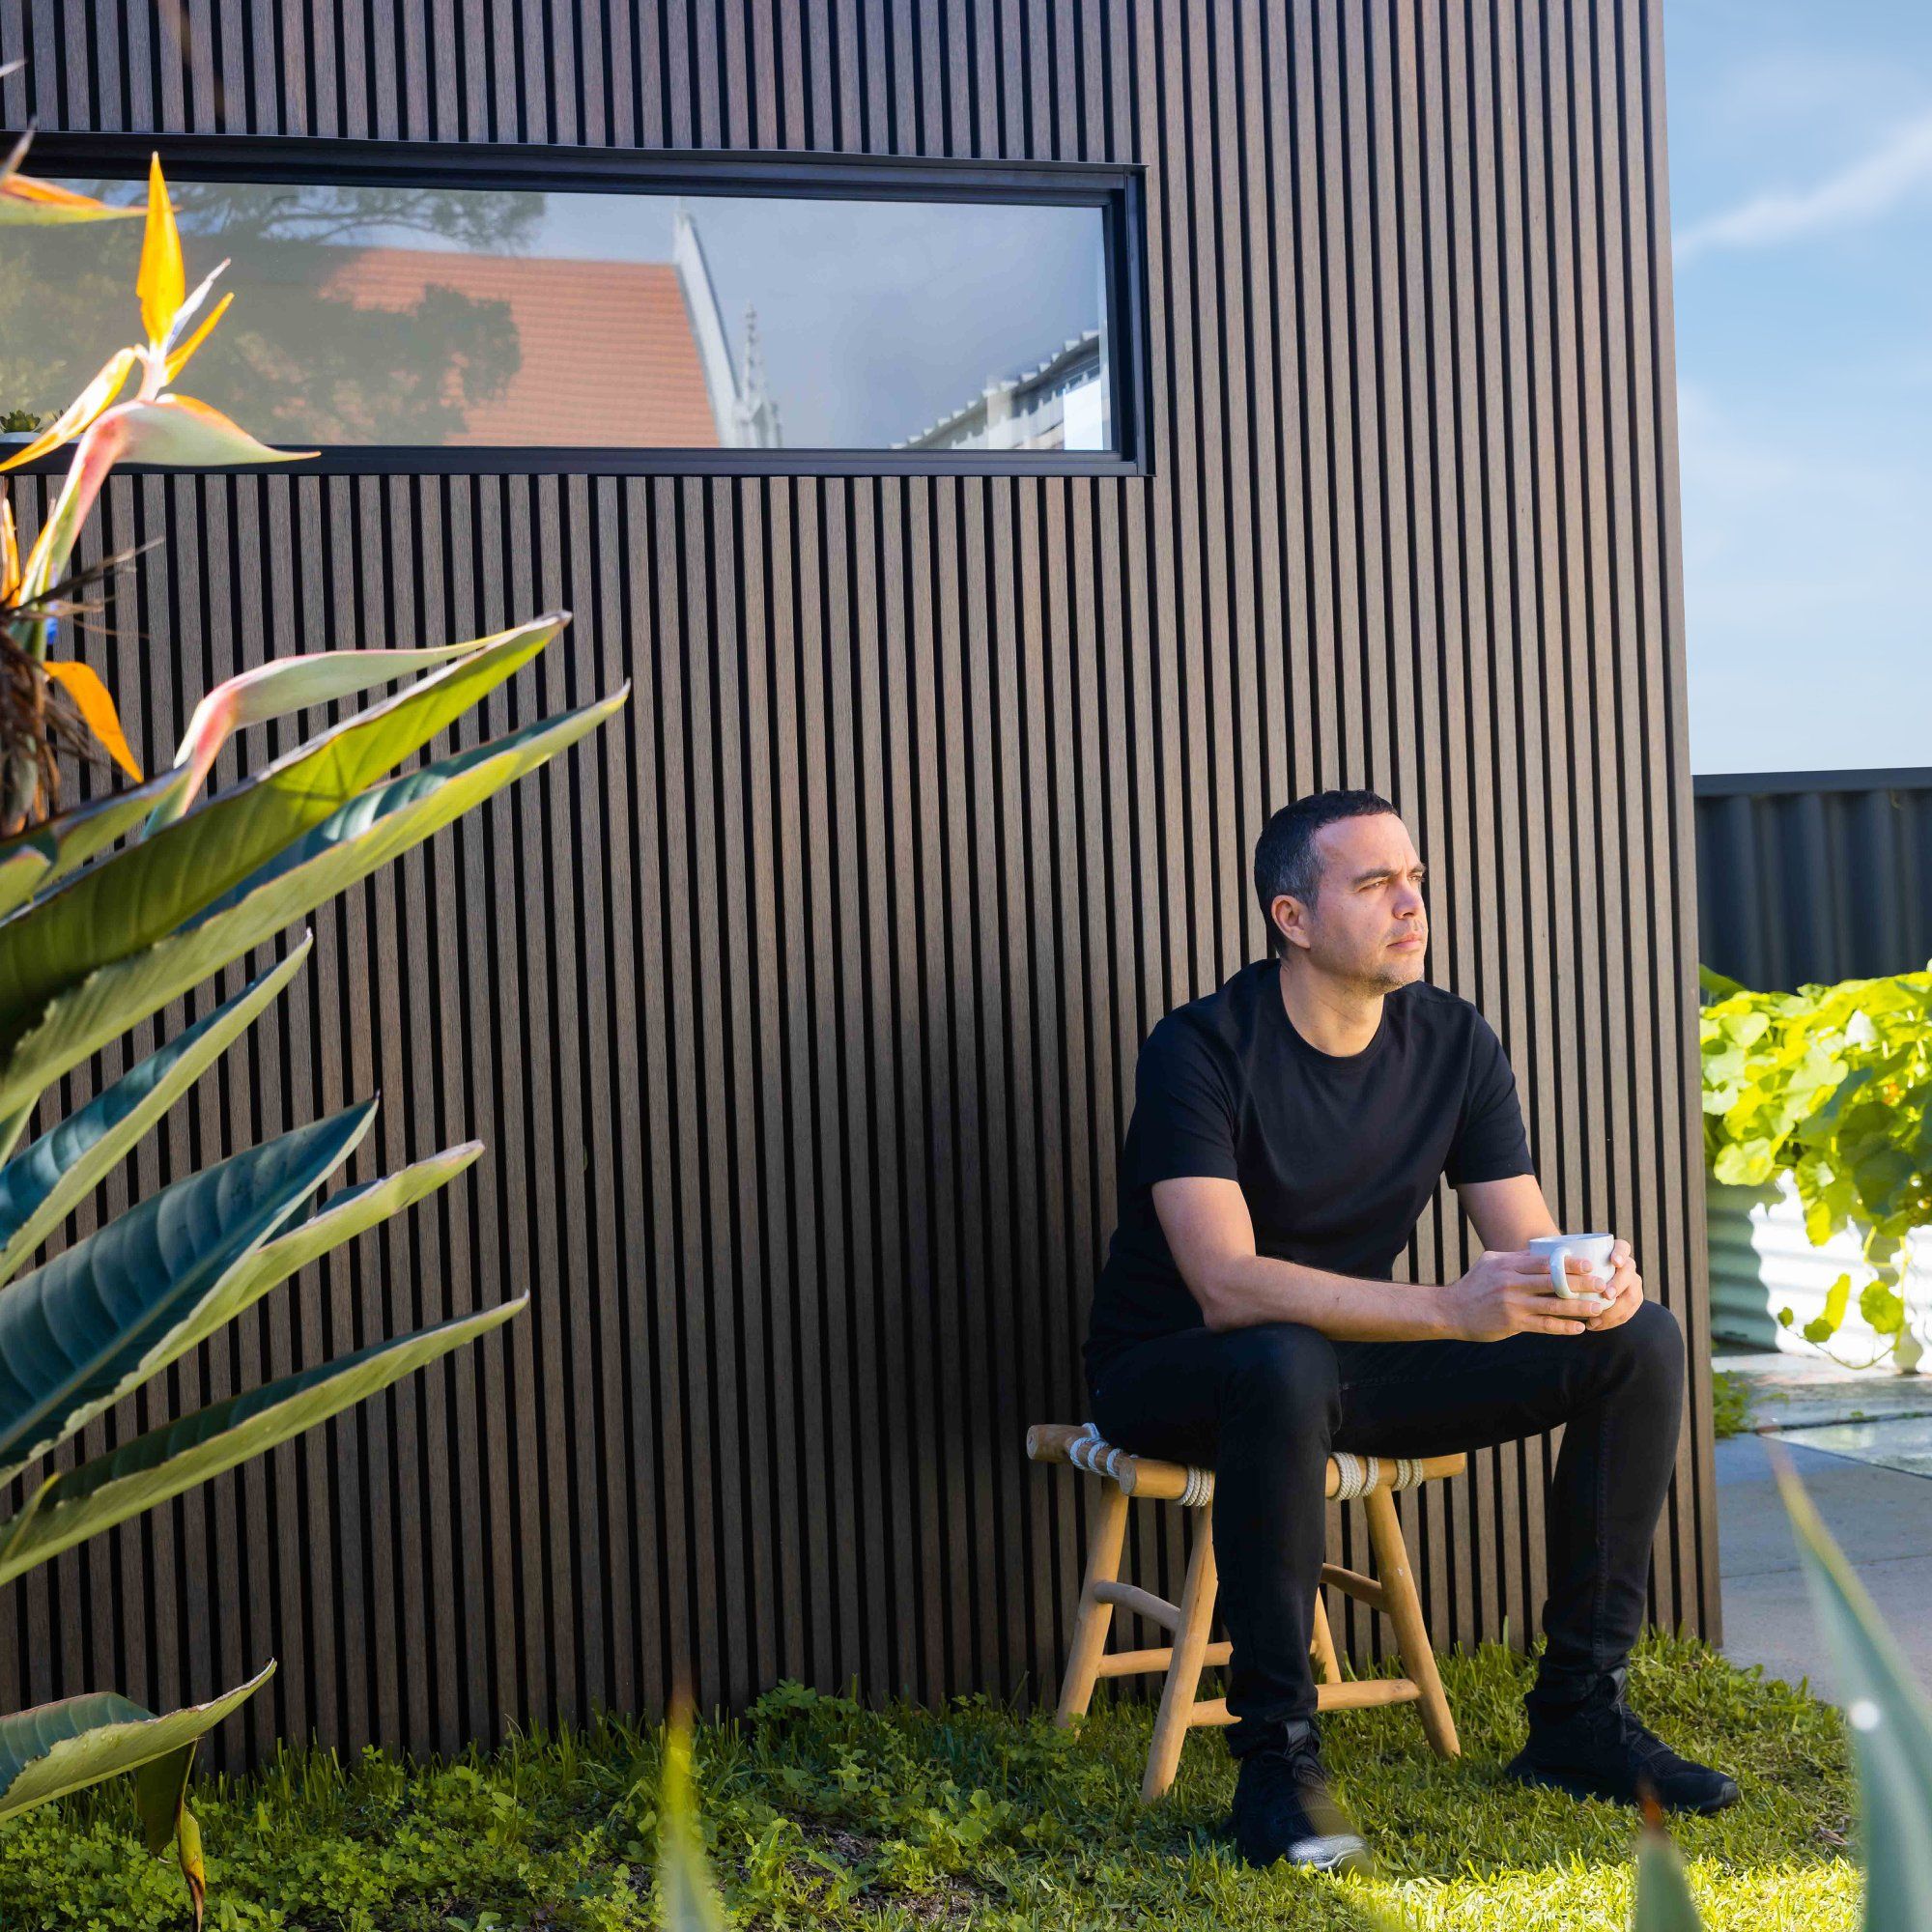 A WFH freelance designer taking a coffee break in the garden